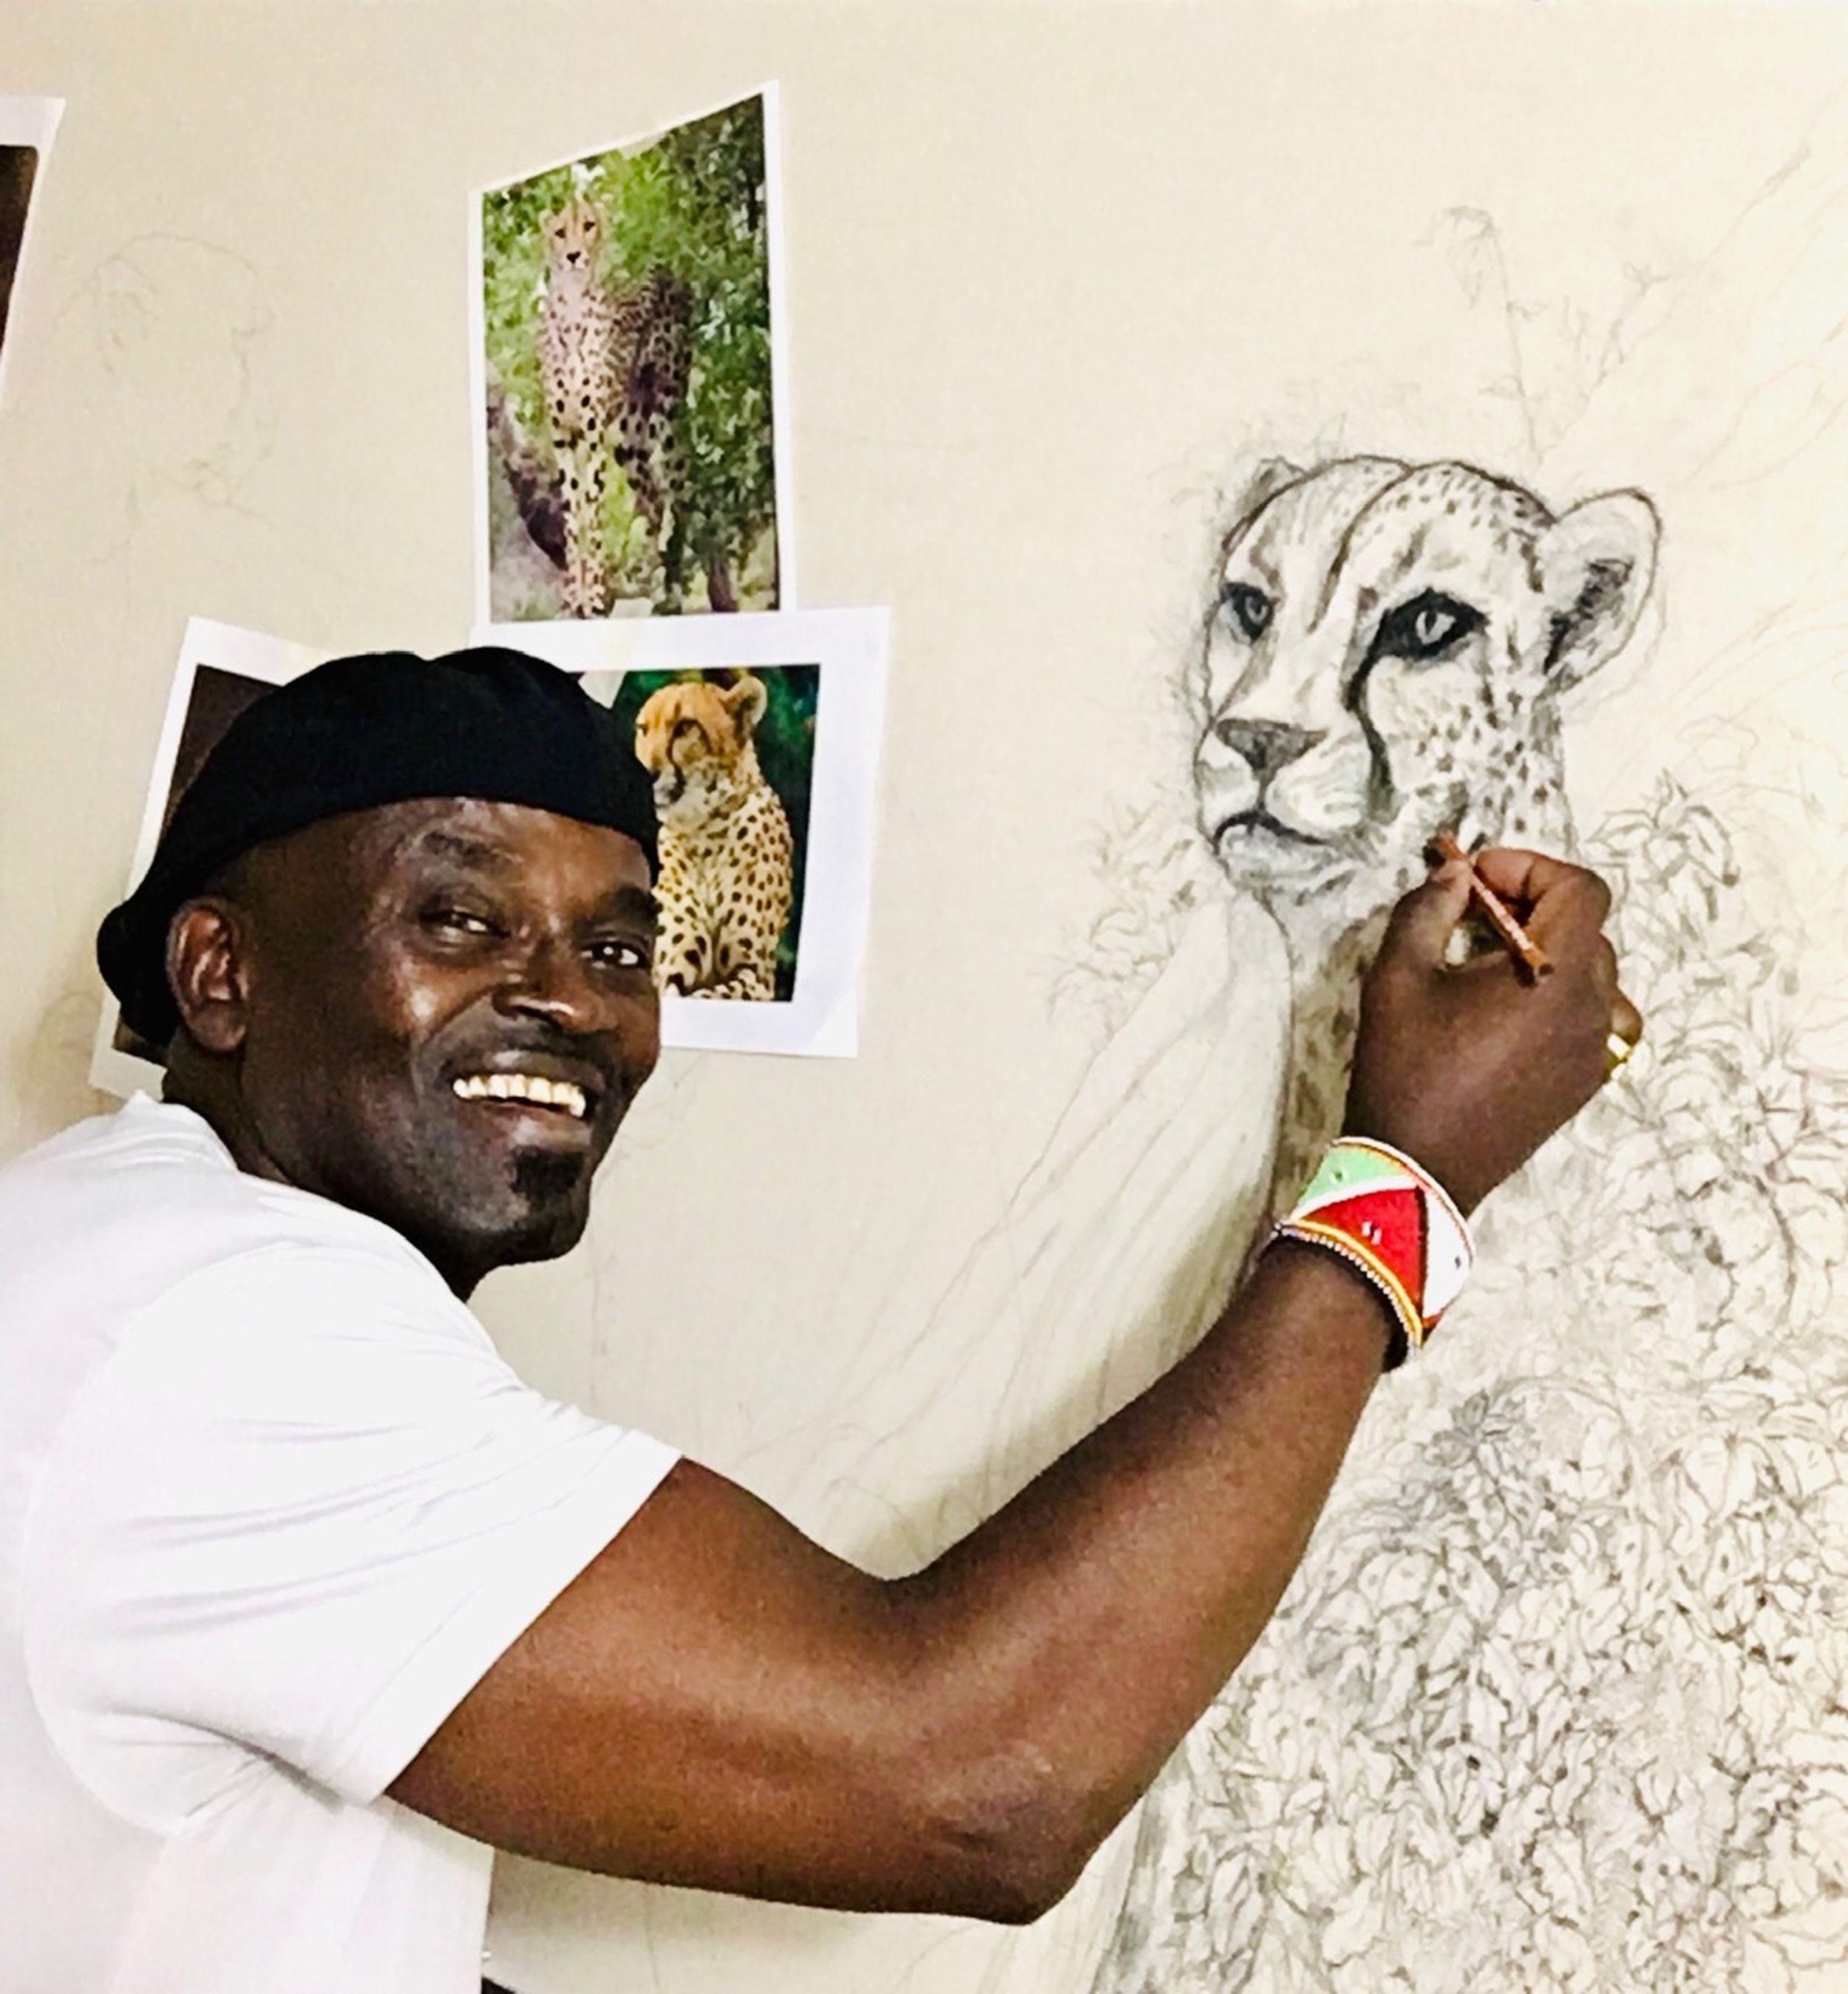 Meet the artmakers at Basecamp Maasai Brand in Kenya - See Great Art